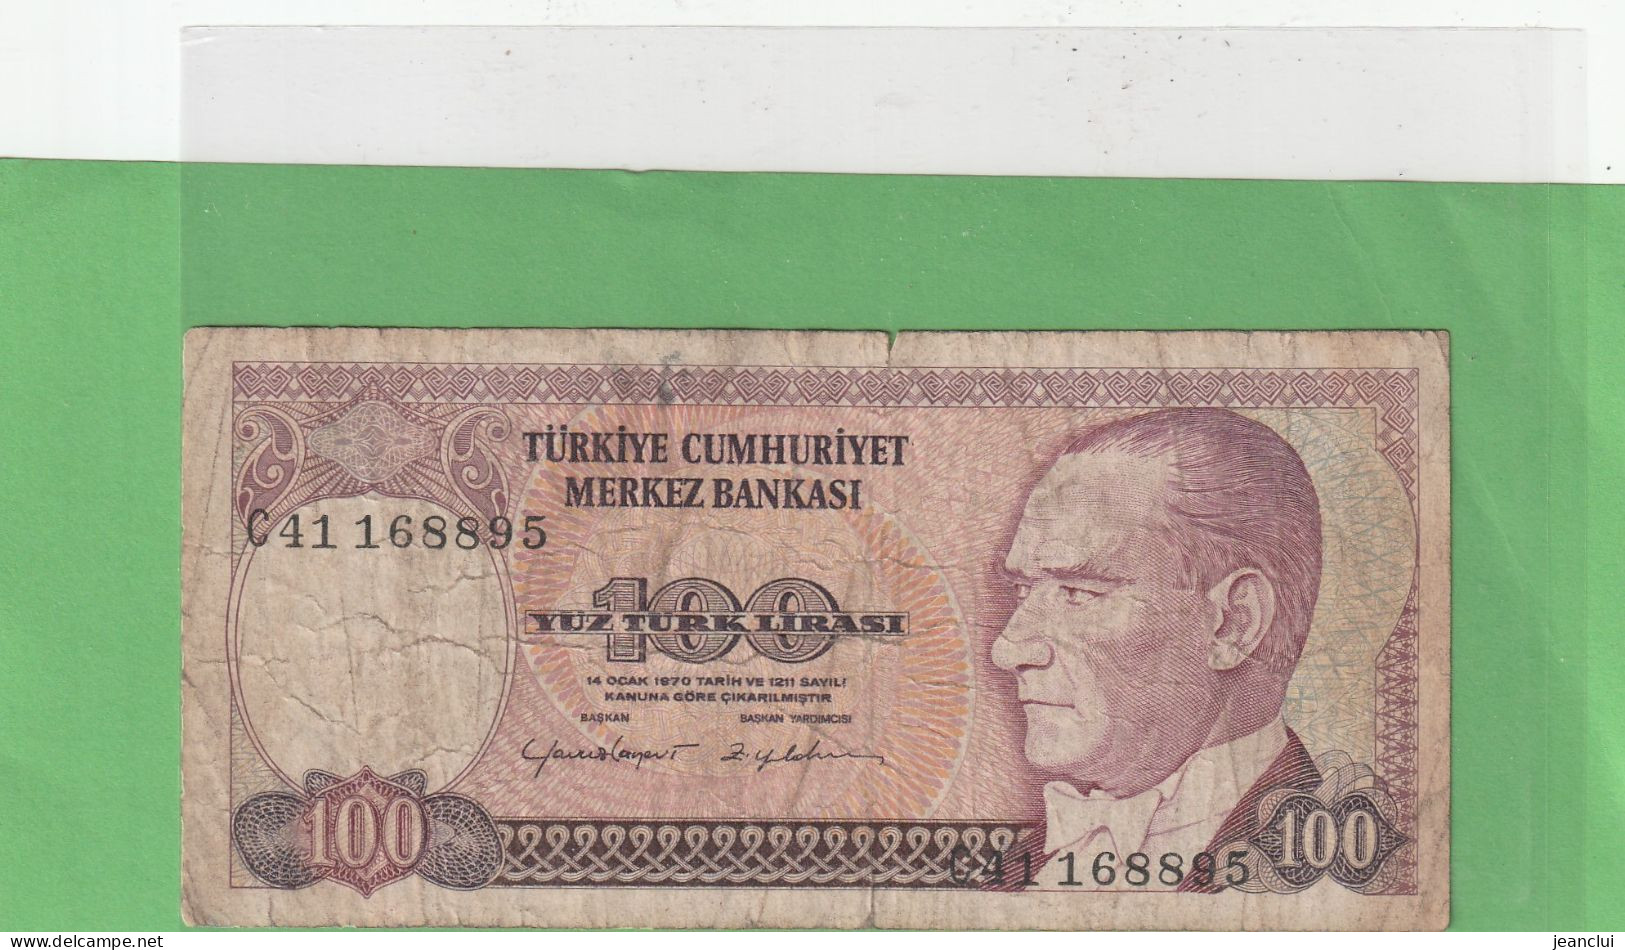 TURKIYE CUMHURIYET MERKEZ BANKASI . 100 LIRA . 14 OCAK 1970  . N°  C41 168895 .  2 SCANNES  .  BILLET USITE - Turquie